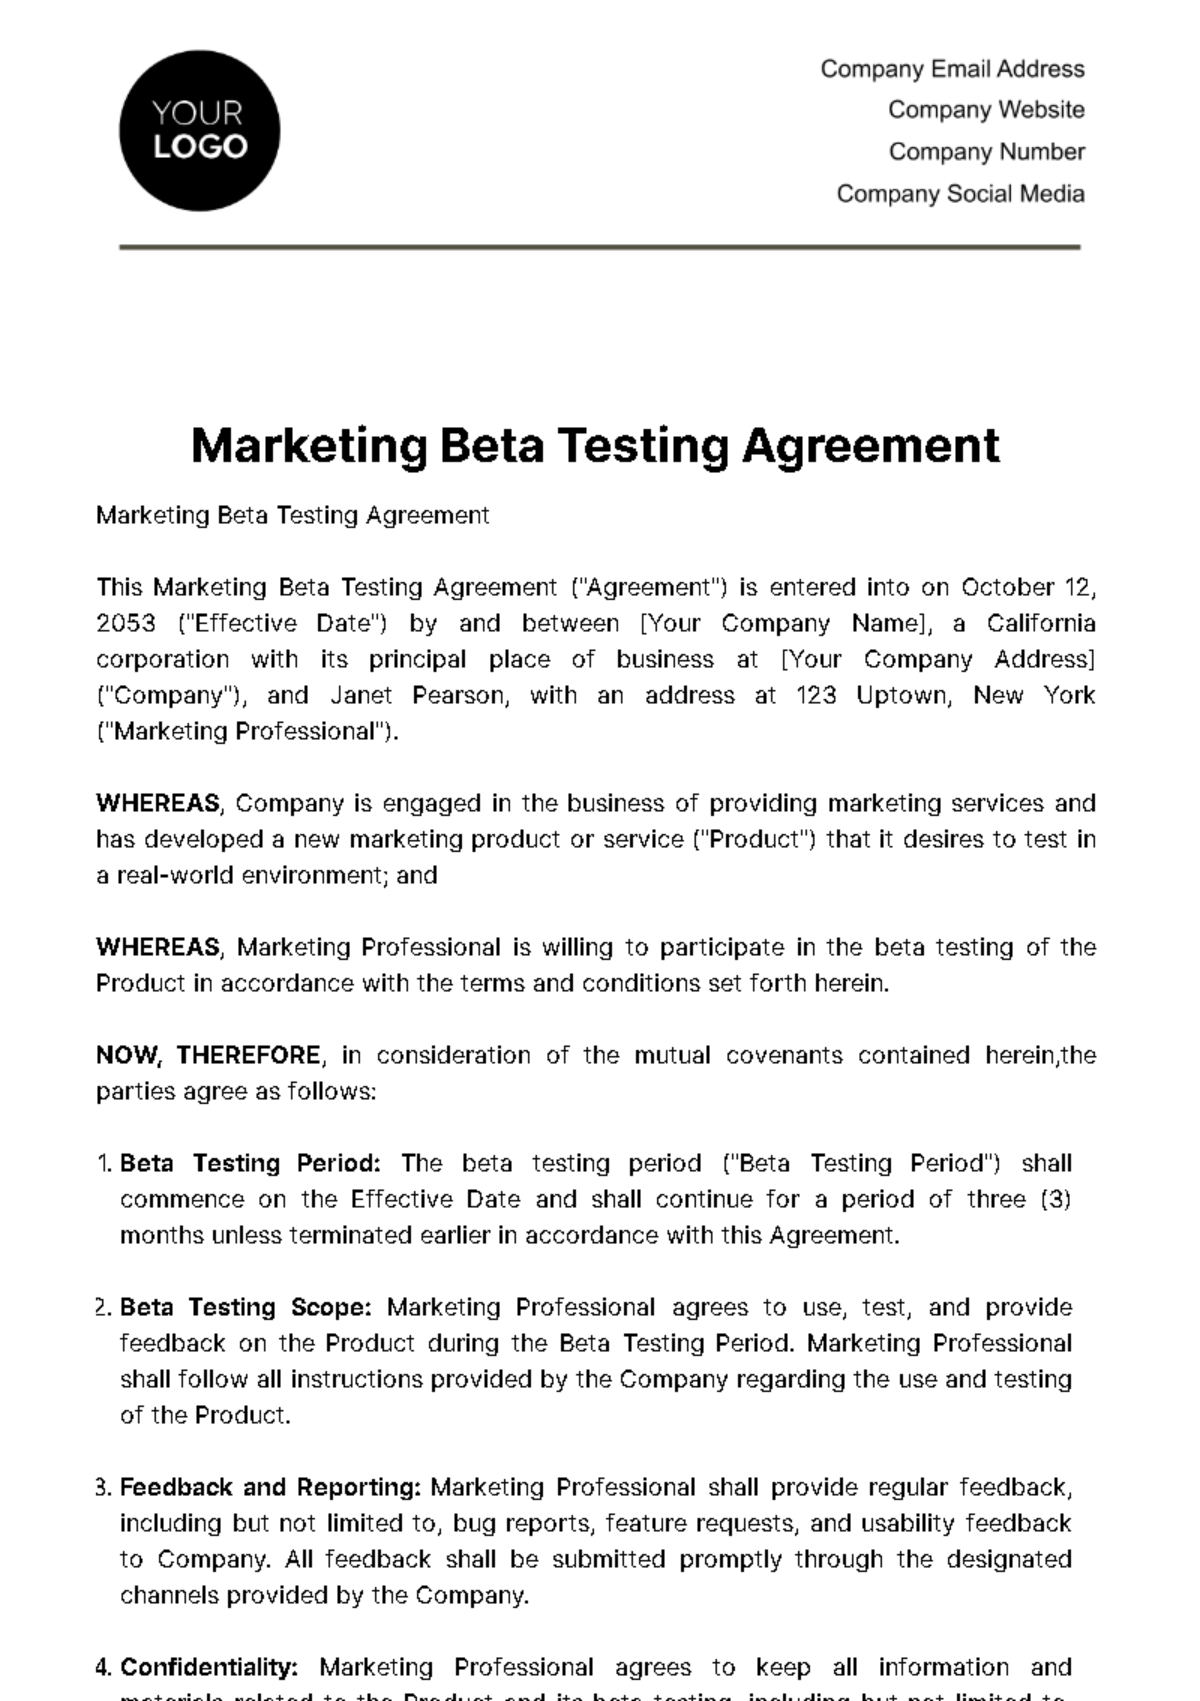 Free Marketing Beta Testing Agreement Template